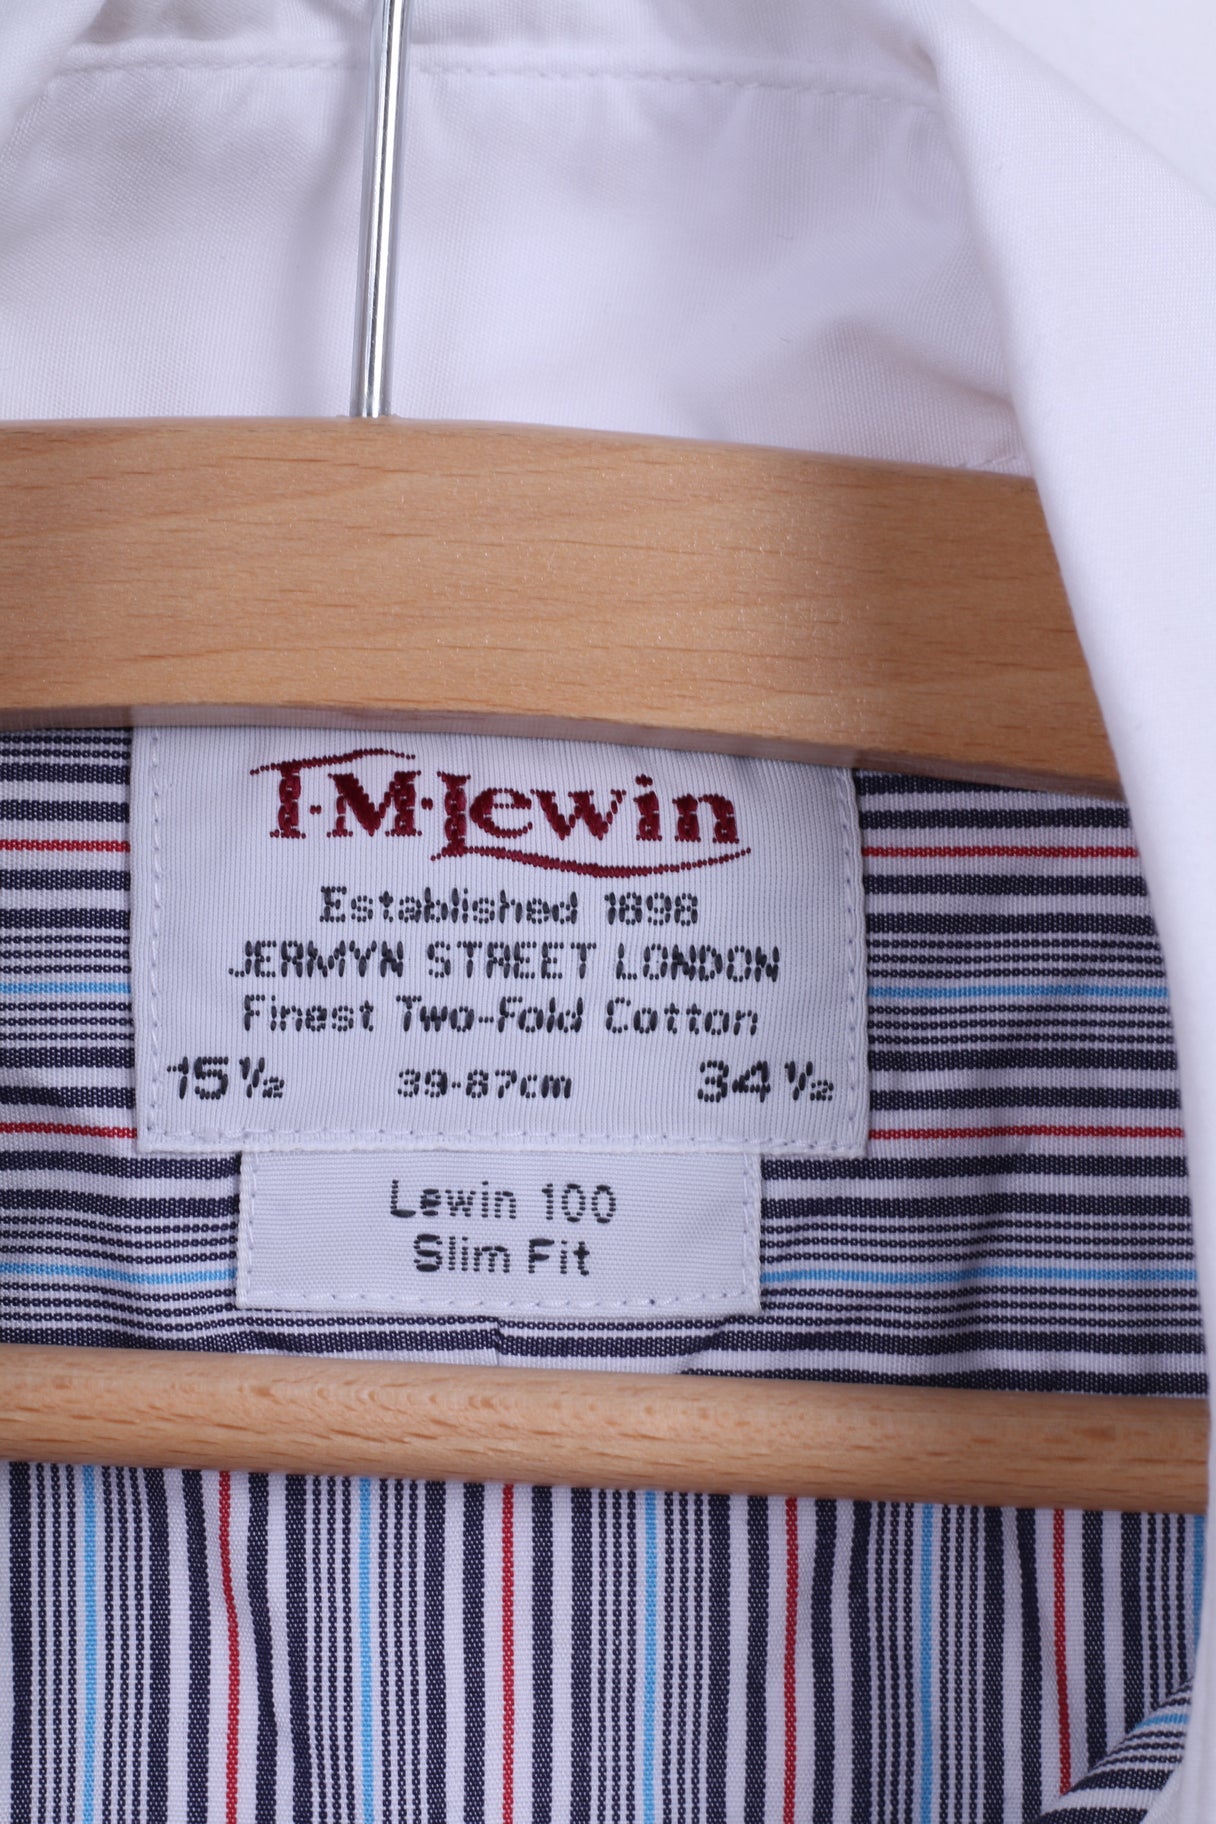 T.M. Lewin Mens 15.5 34.5 M Casual Shirt Blue Striped Cotton Cuffs Slim Fit